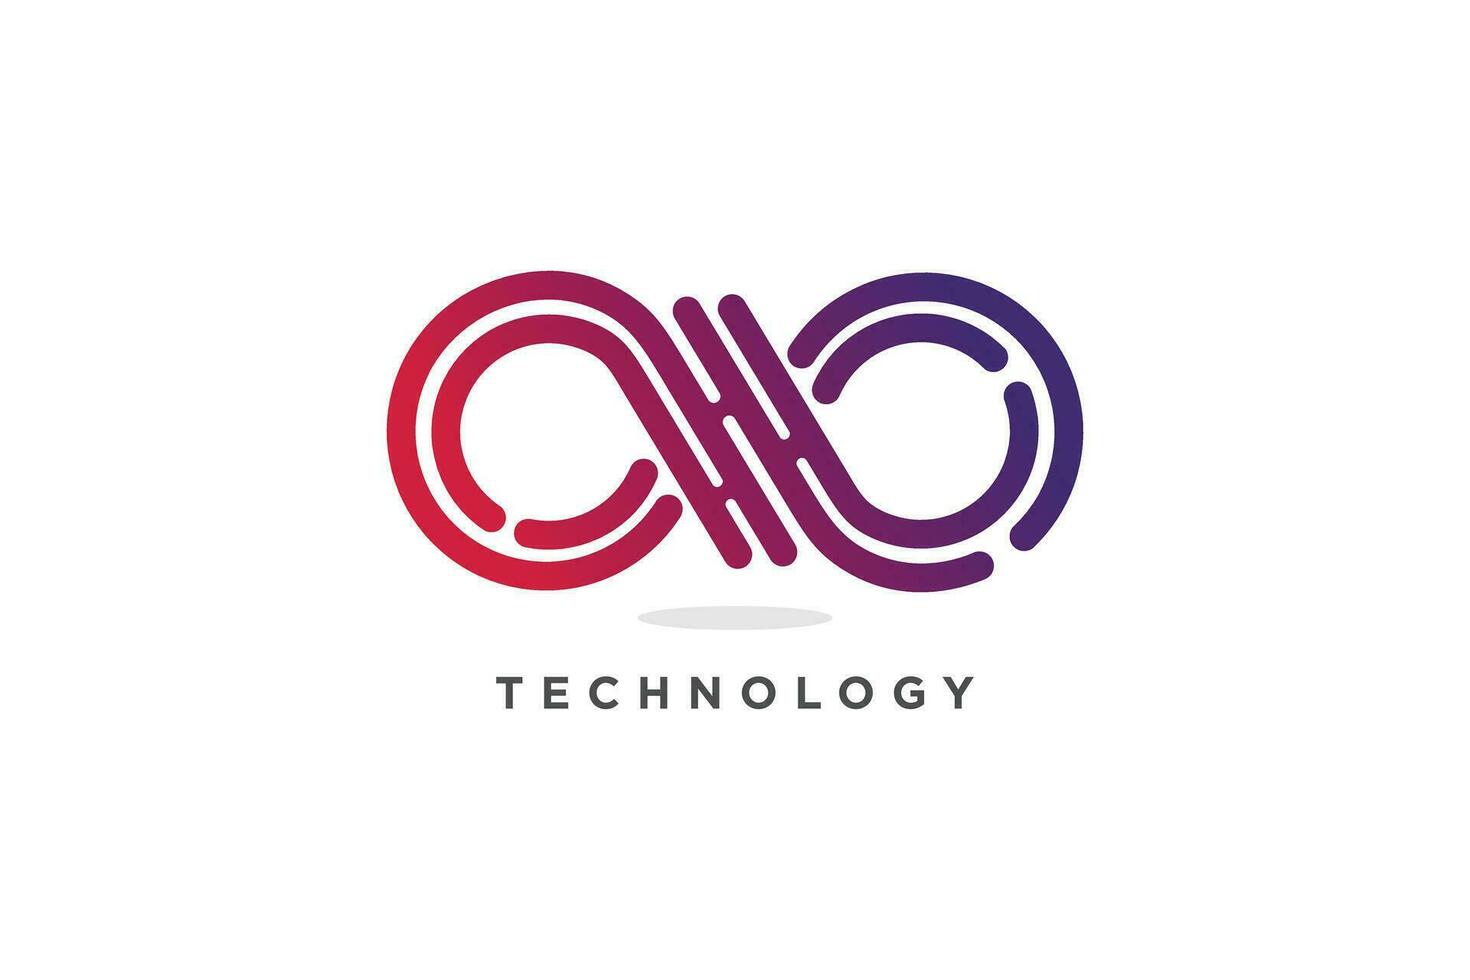 Infinity logo idea with modern creative technology concept vector